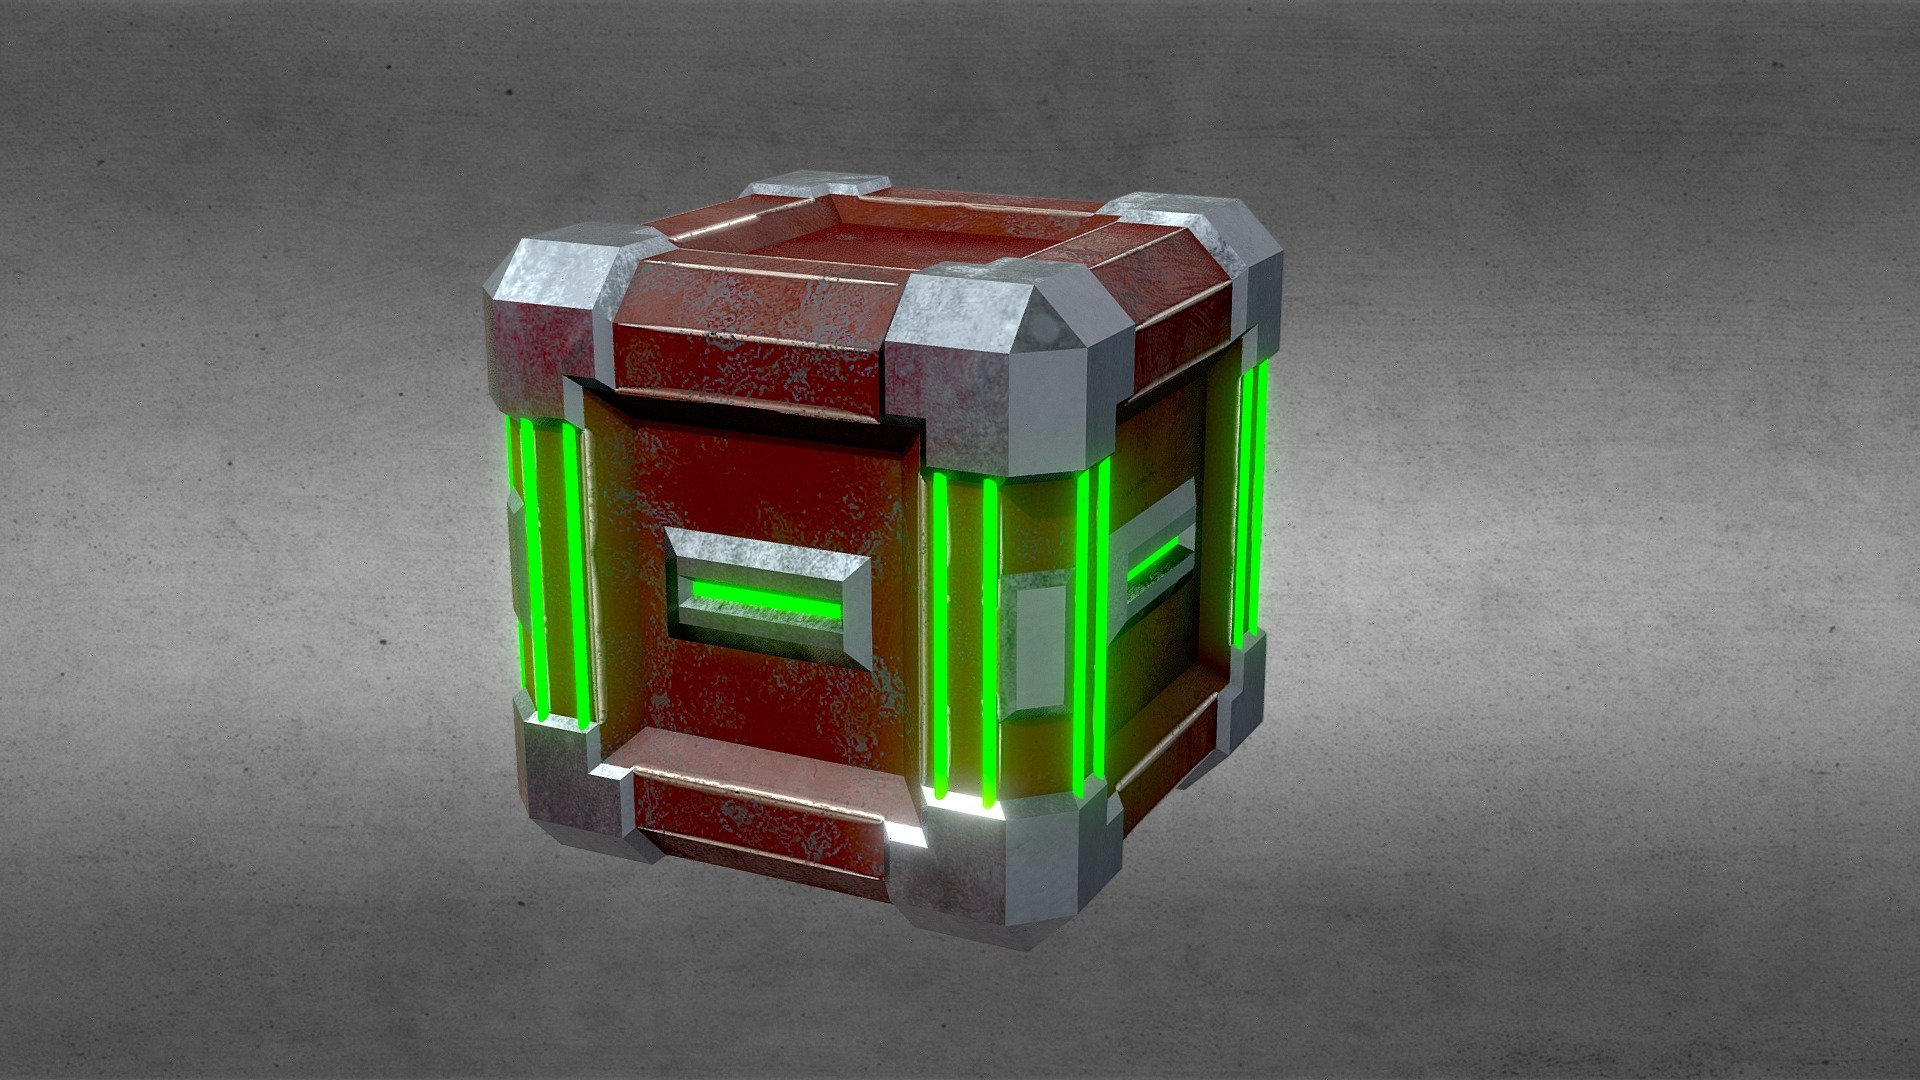 A Sci-fi drop box ready for videogames 3d model